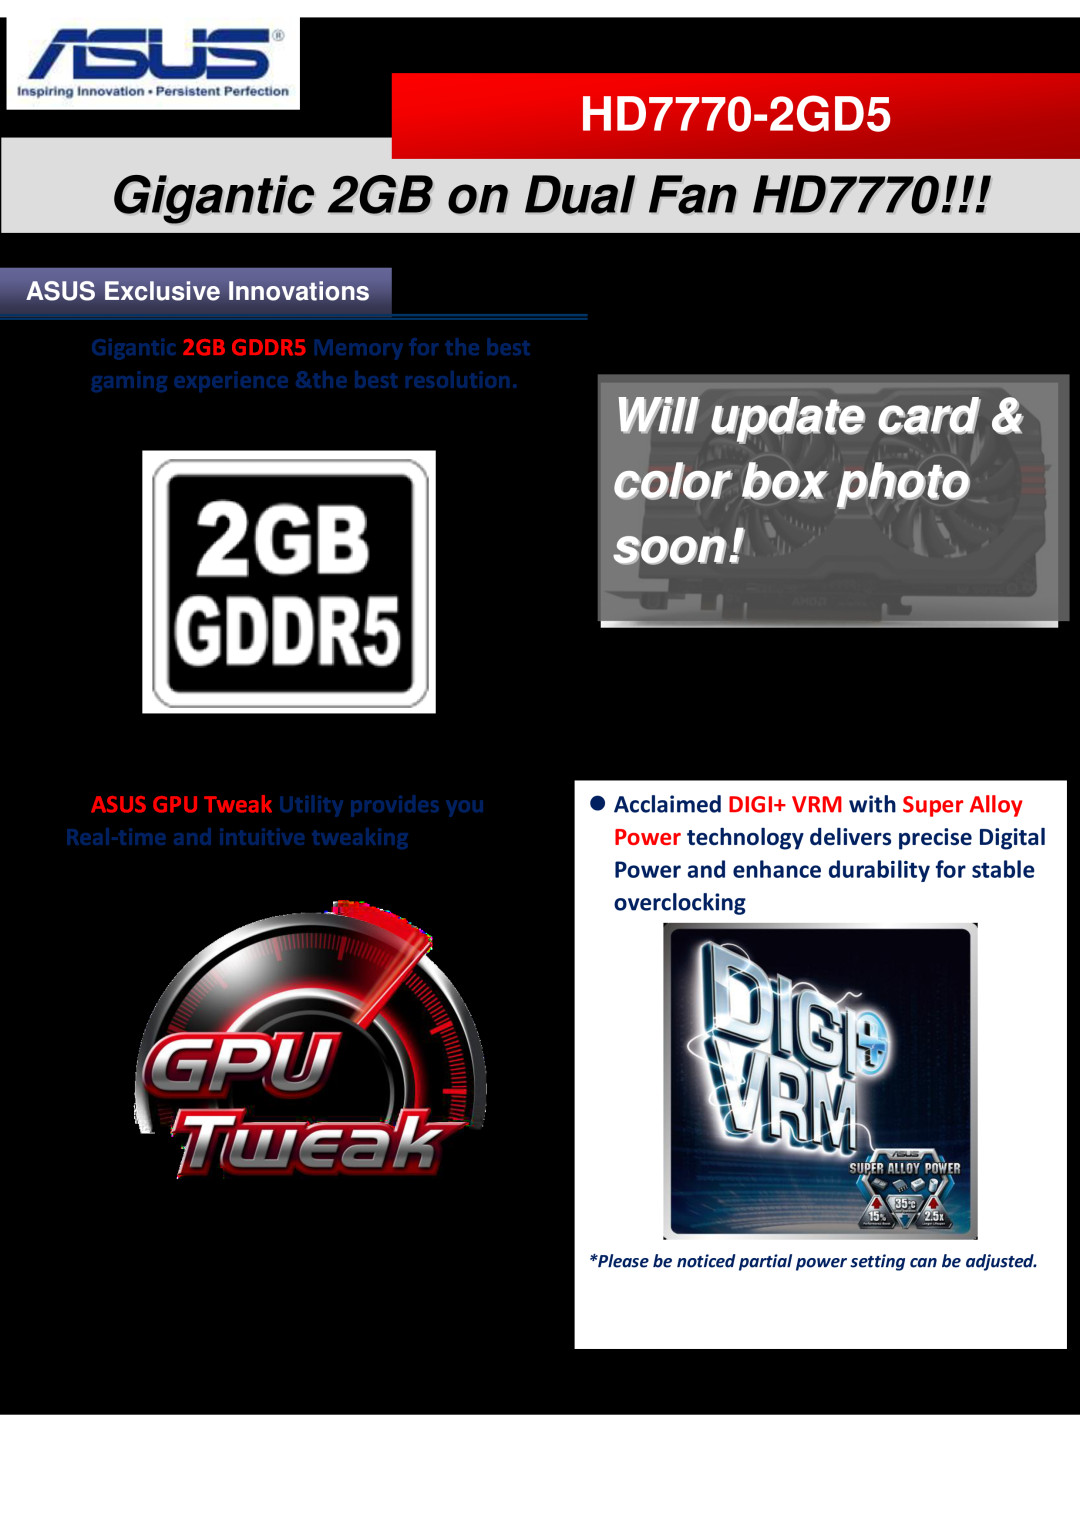 Asus HD77702GD5 manual ASUS Exclusive Innovations,  ASUS GPU Tweak Utility provides you, Real-time and intuitive tweaking 